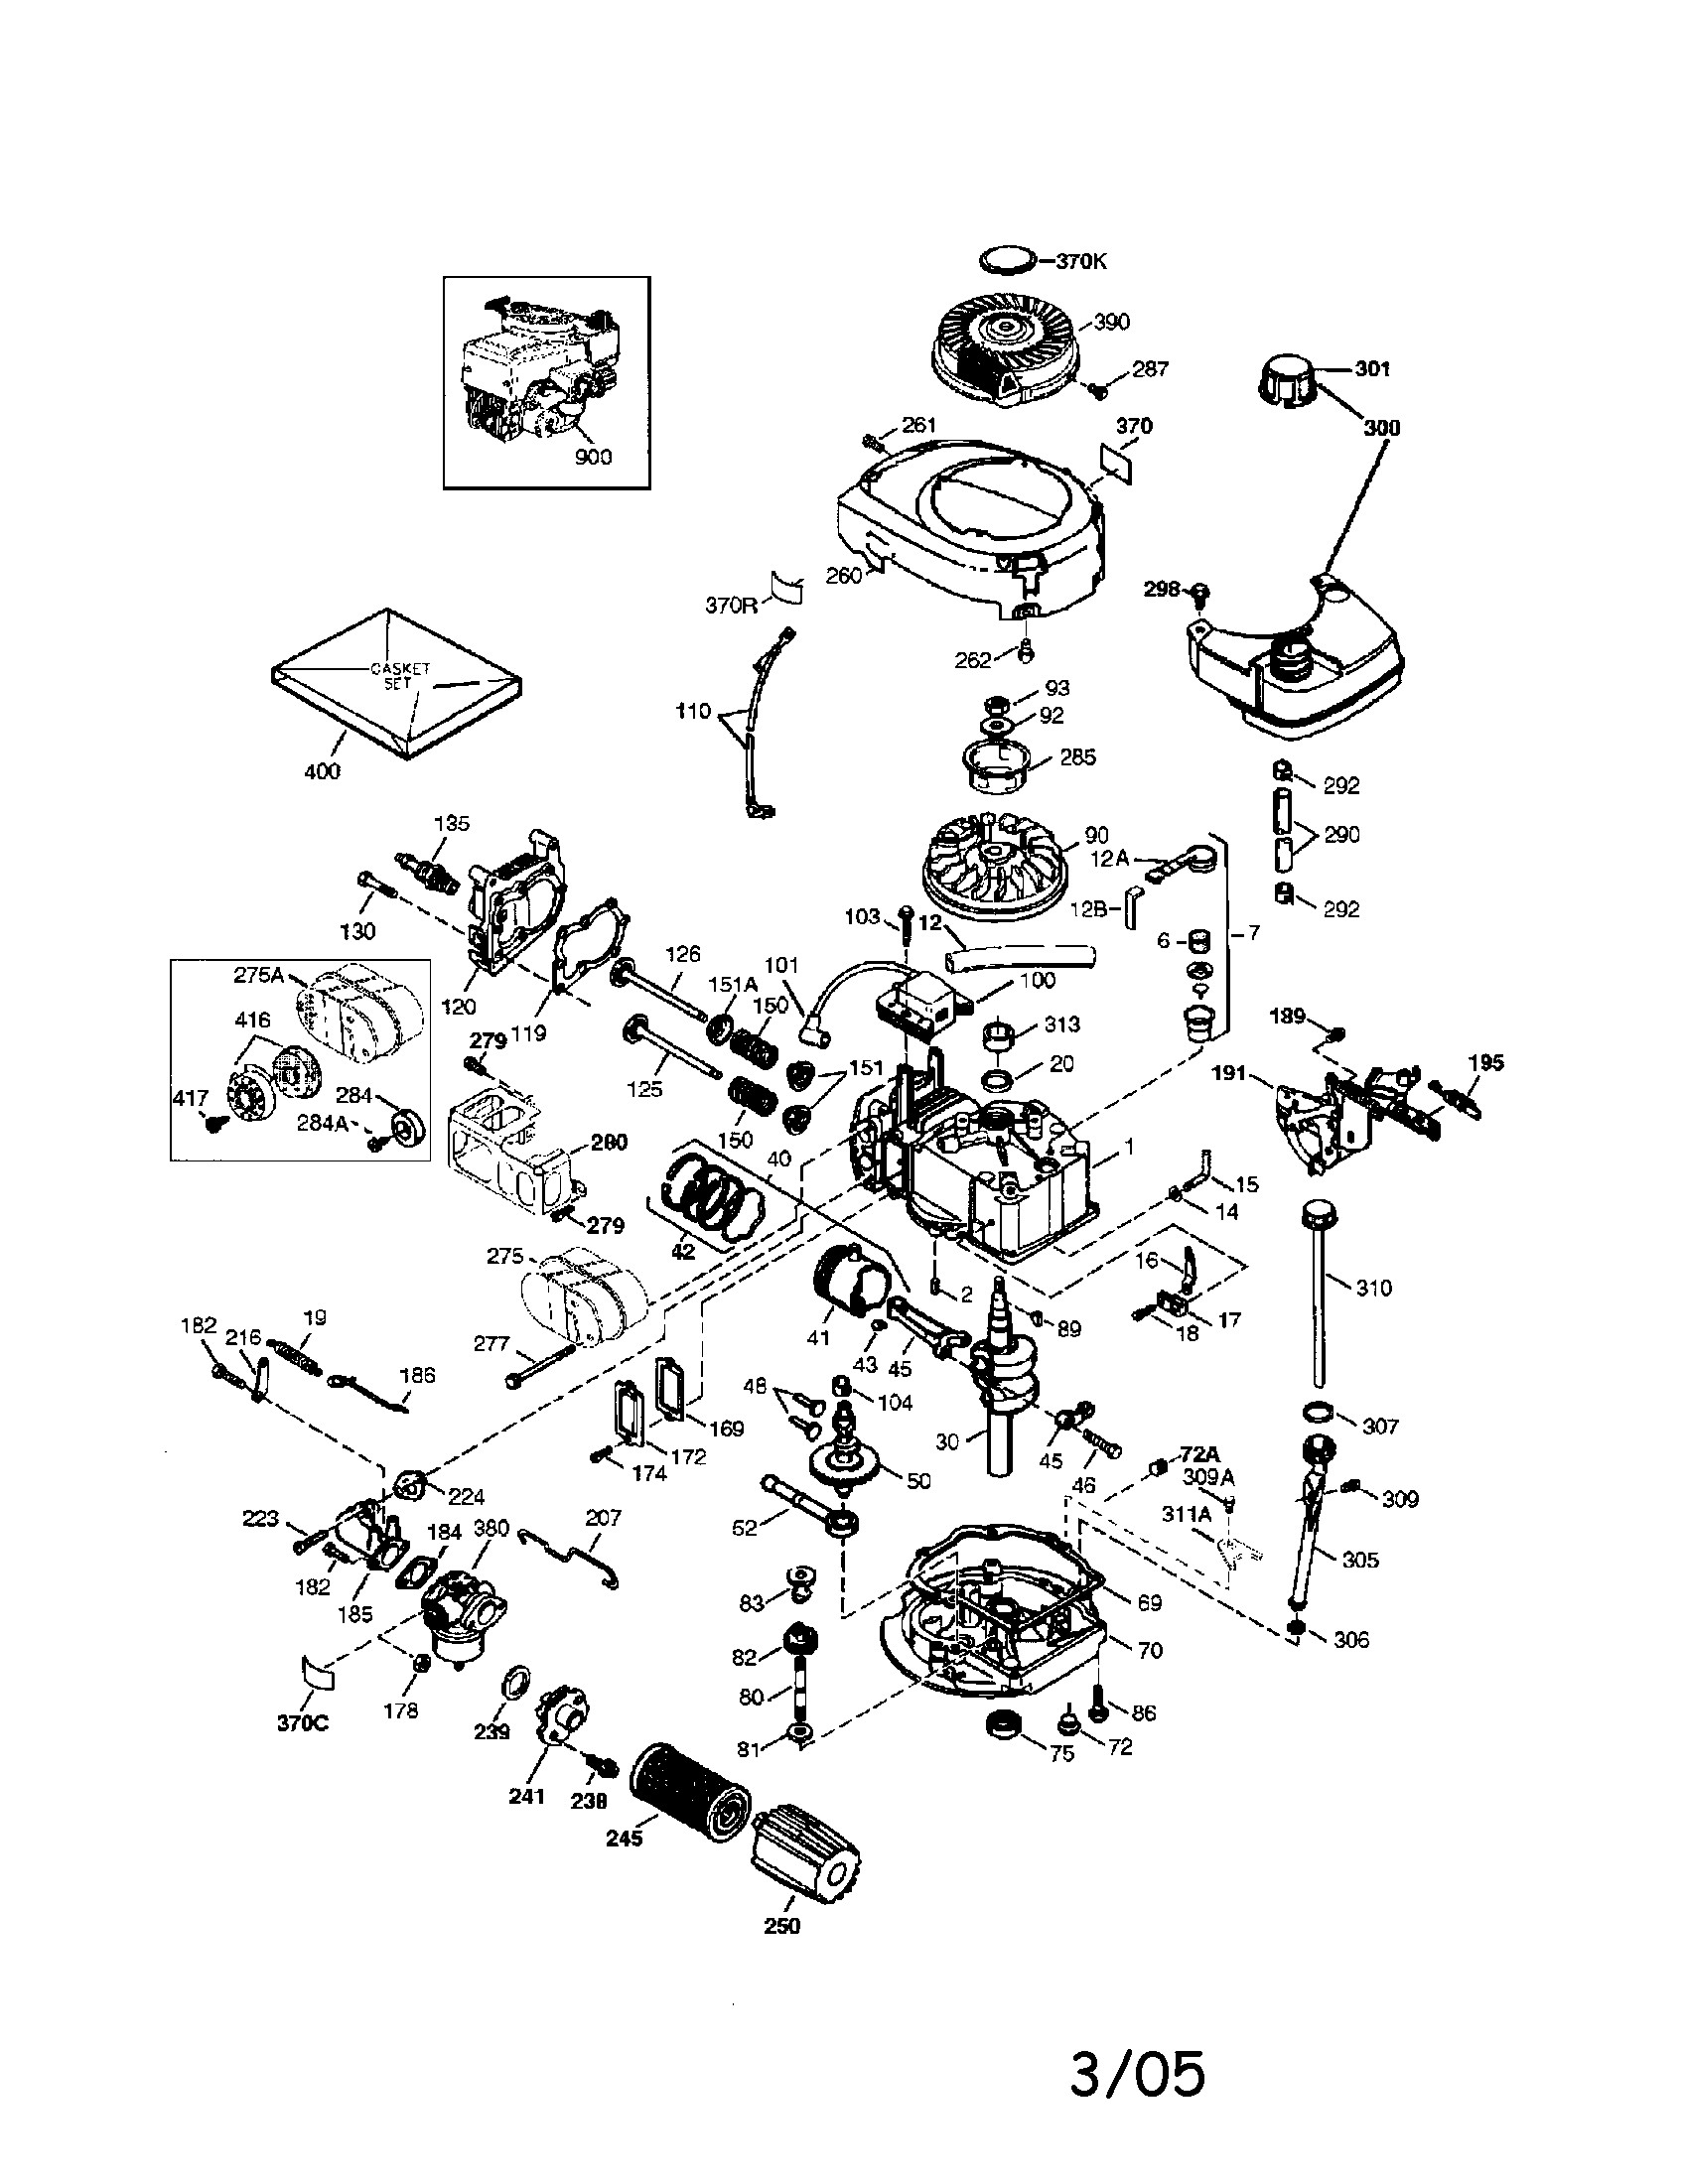 Tecumseh 6hp Power Sport Engine Diagram Looking for Craftsman Model Lawn & Garden Engine Repair Of Tecumseh 6hp Power Sport Engine Diagram